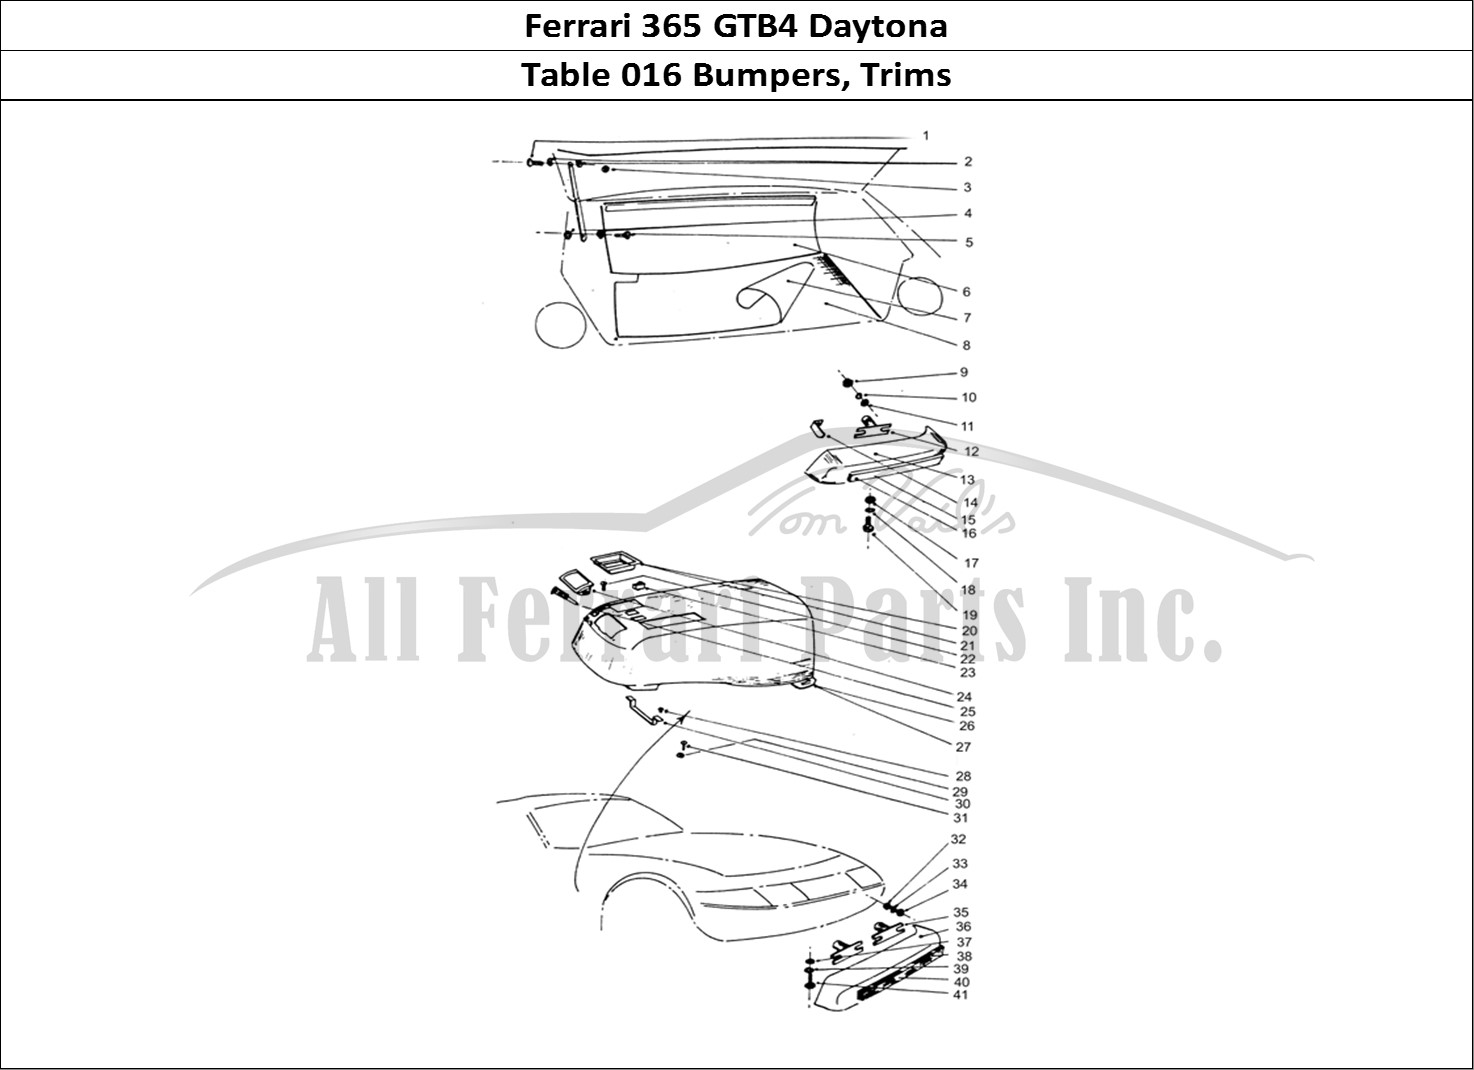 Ferrari Parts Ferrari 365 GTB4 Daytona (Coachwork) Page 016 Bumpers Front & Rear